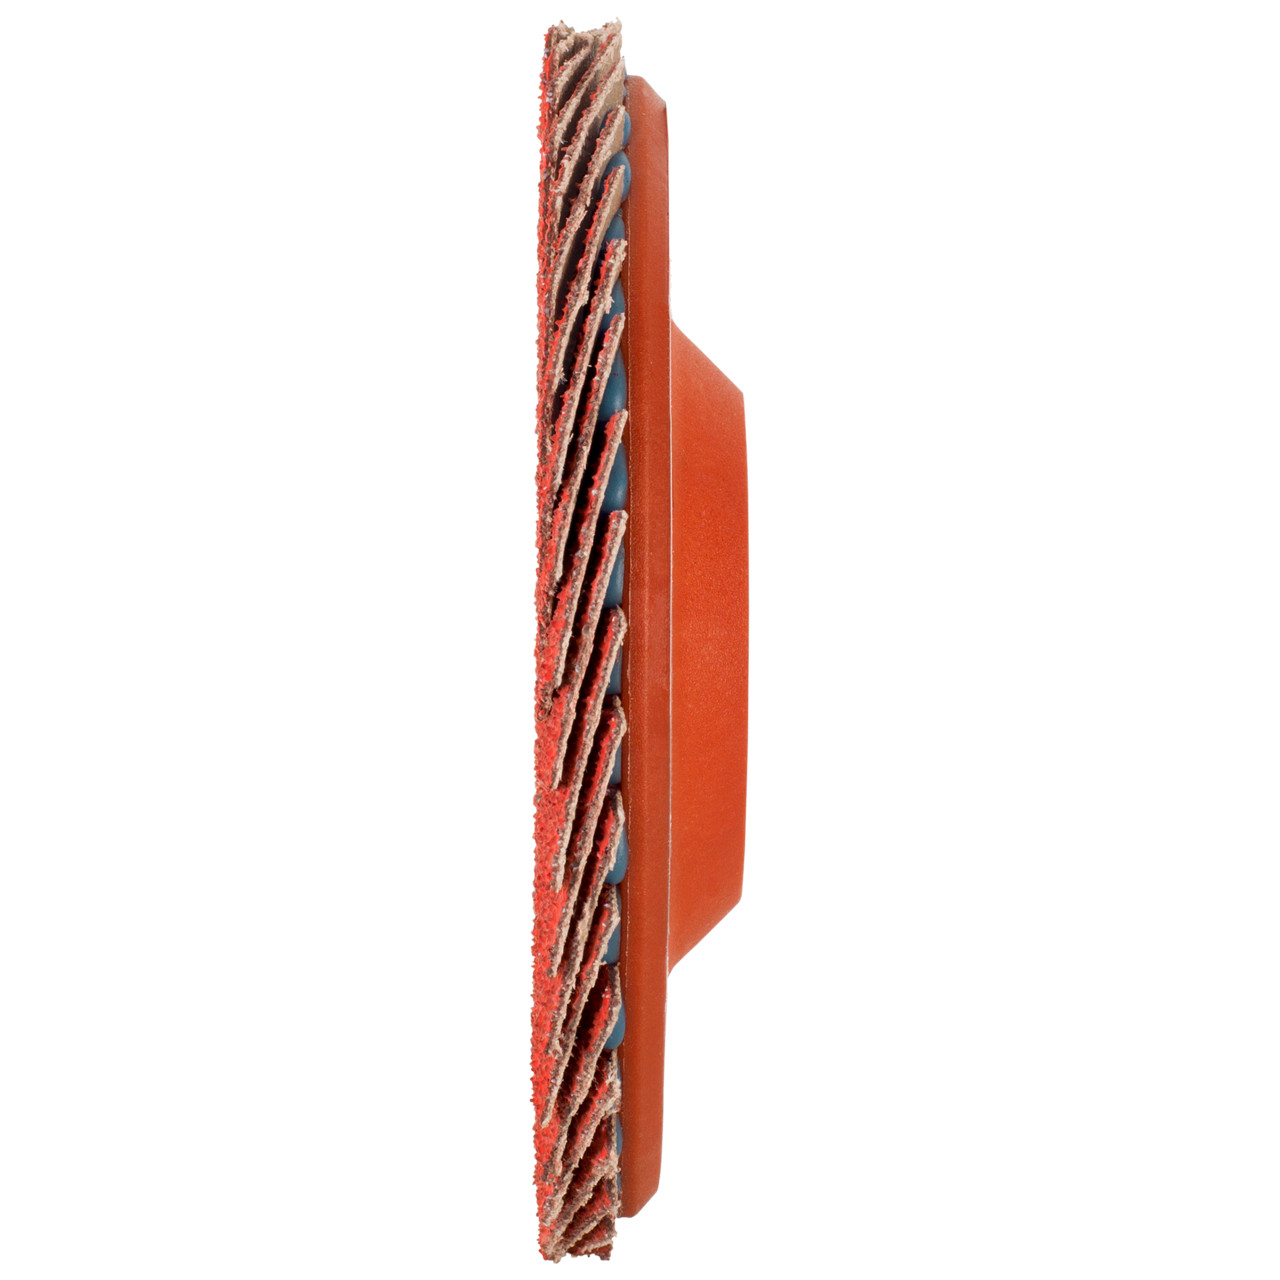 Tyrolit Serrated lock washer DxH 125x22.23 CERAMIC for stainless steel, P80, shape: 28N - straight version (plastic carrier body), Art. 34166865